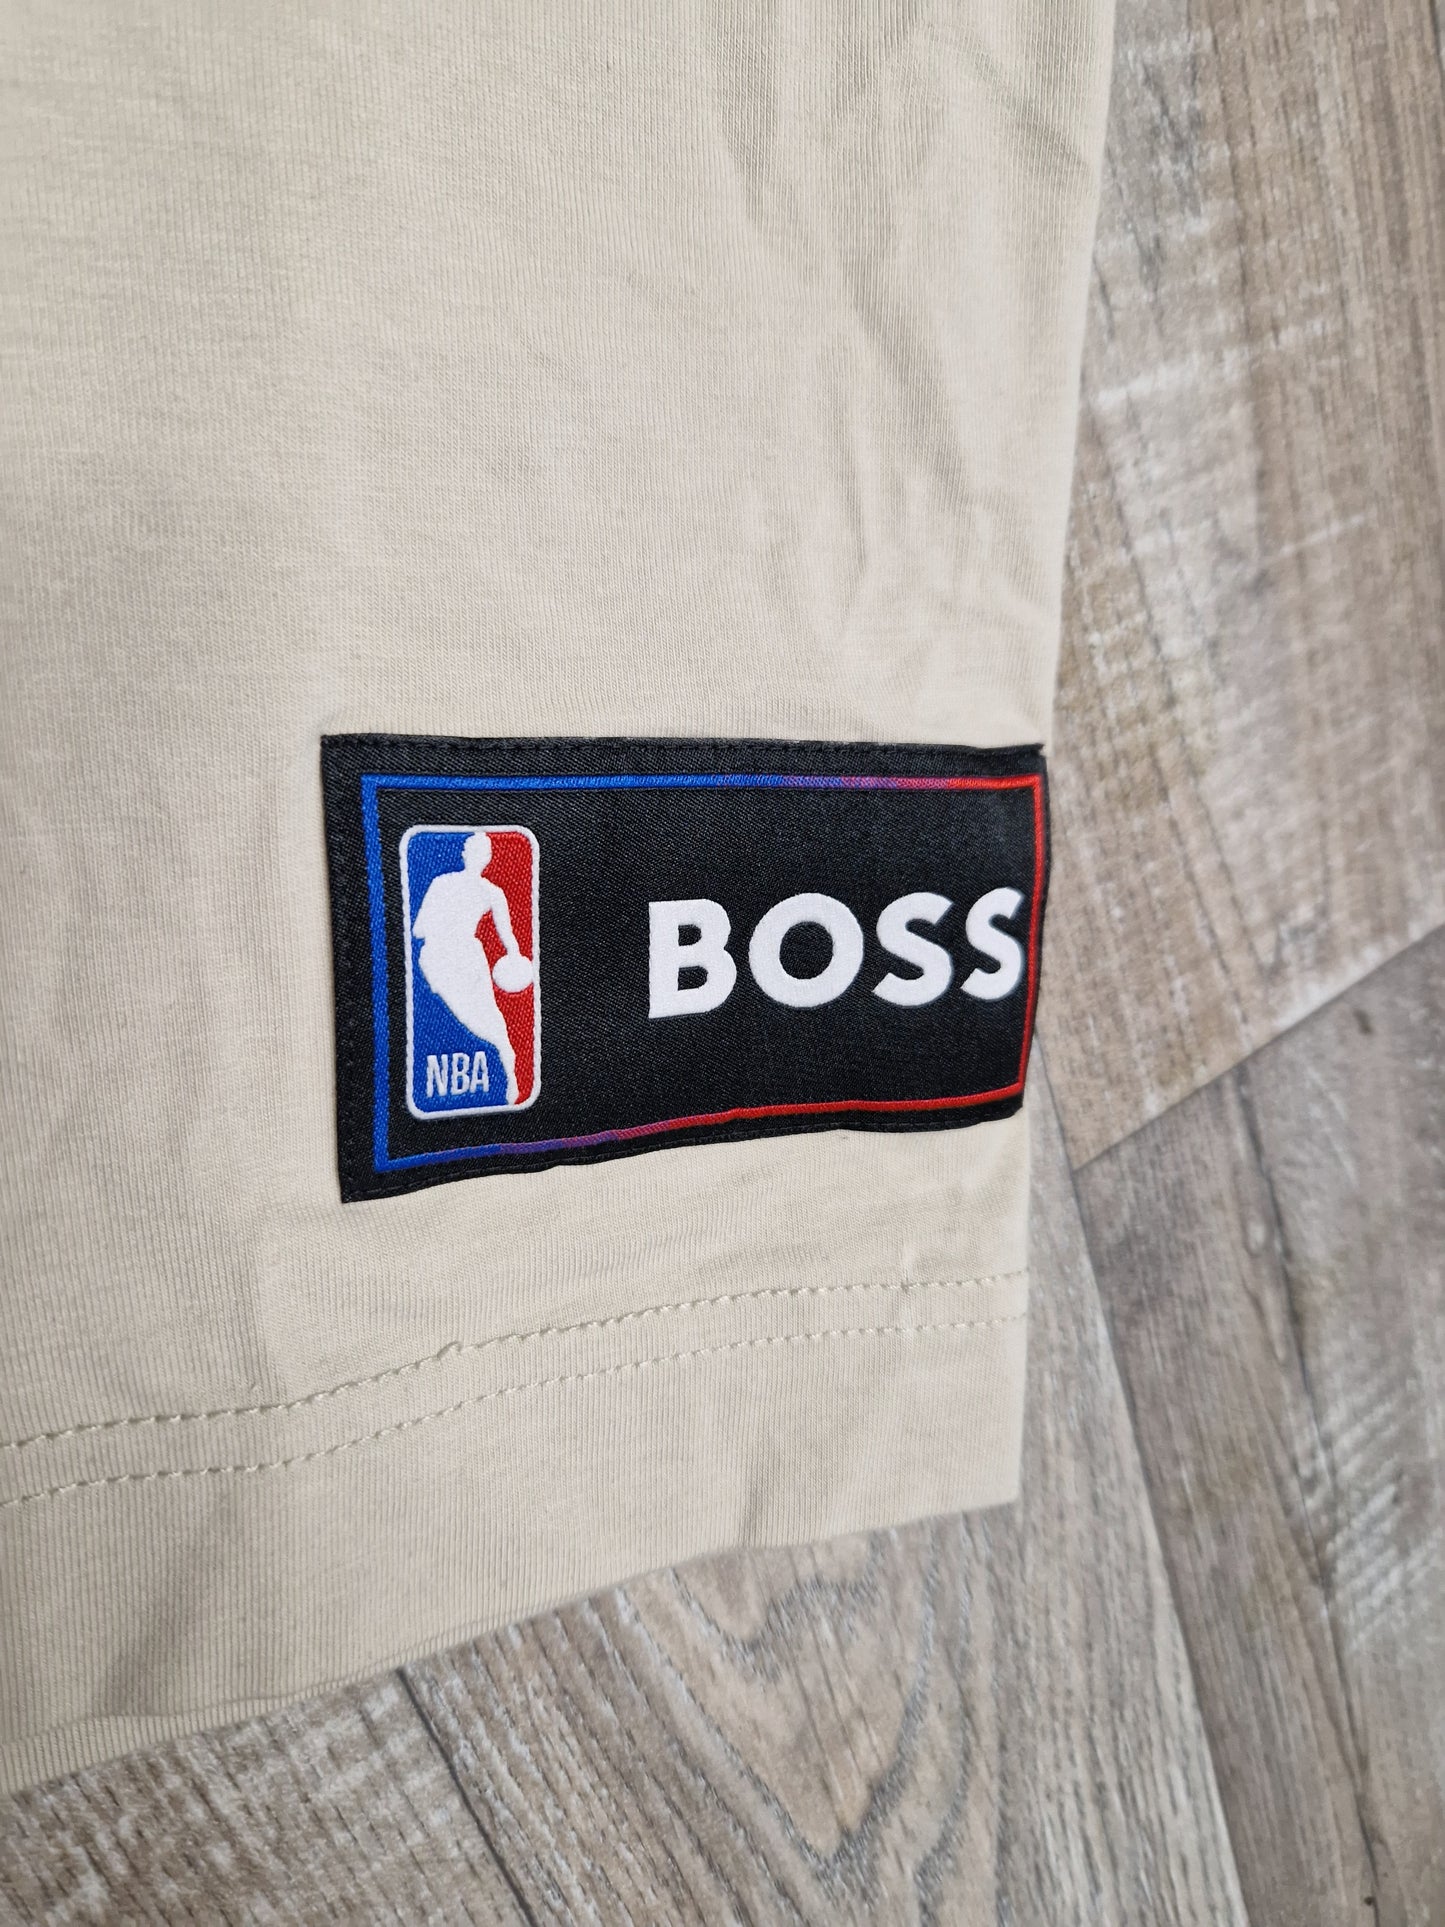 Los Angeles Lakers X Hugo Boss T-Shirt Size Small